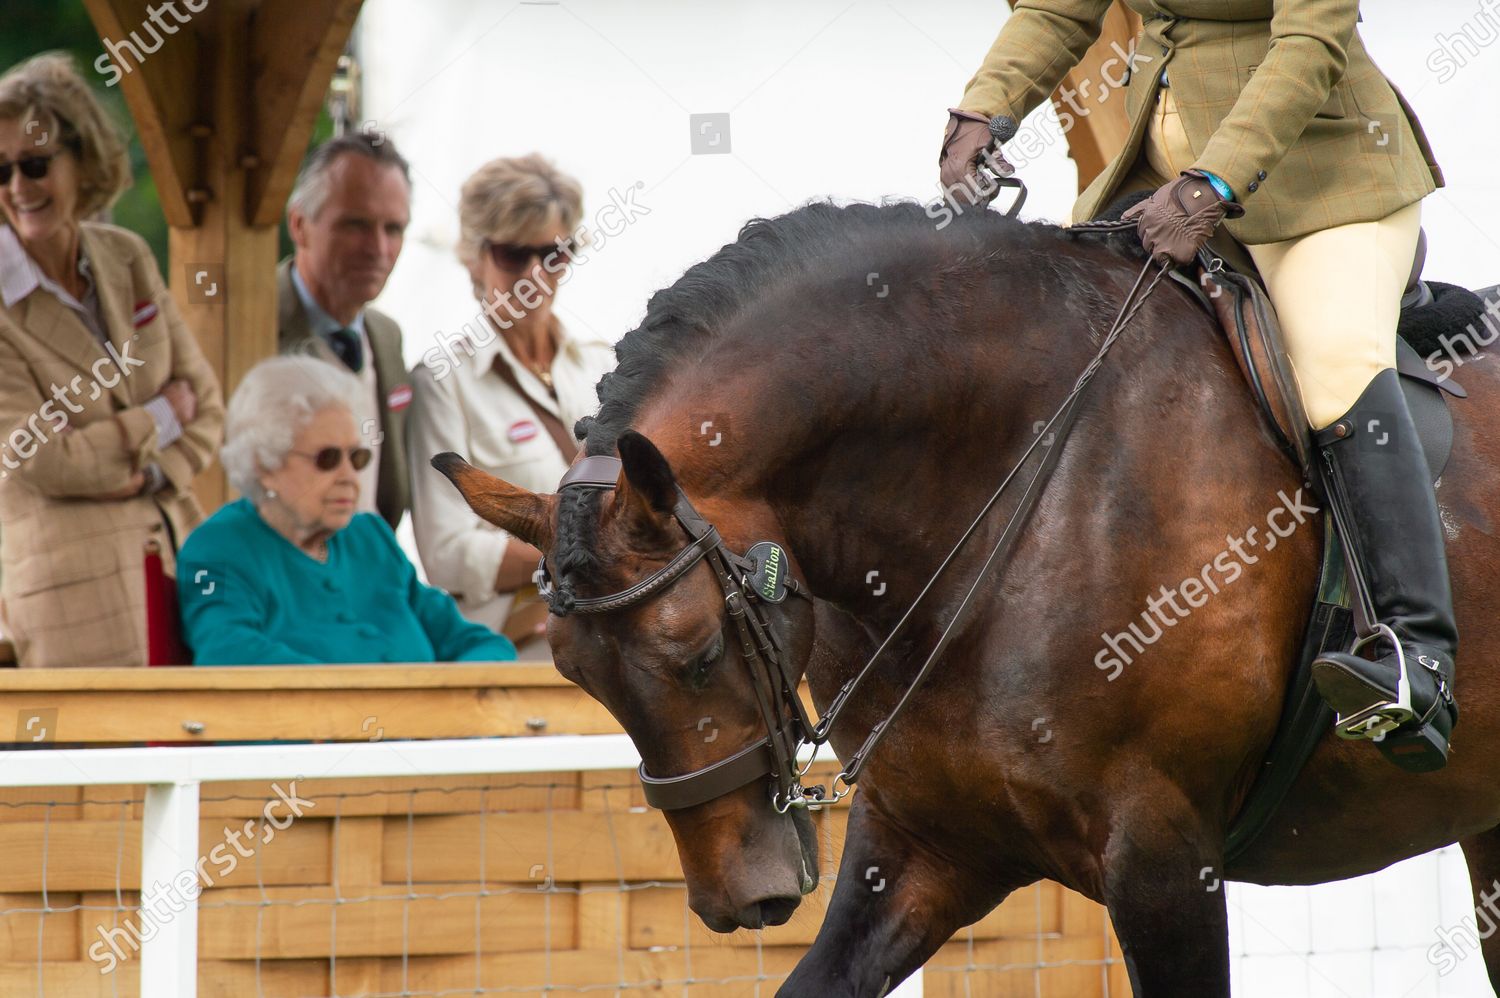 royal-windsor-horse-show-day-1-uk-shutterstock-editorial-12191766ds.jpg